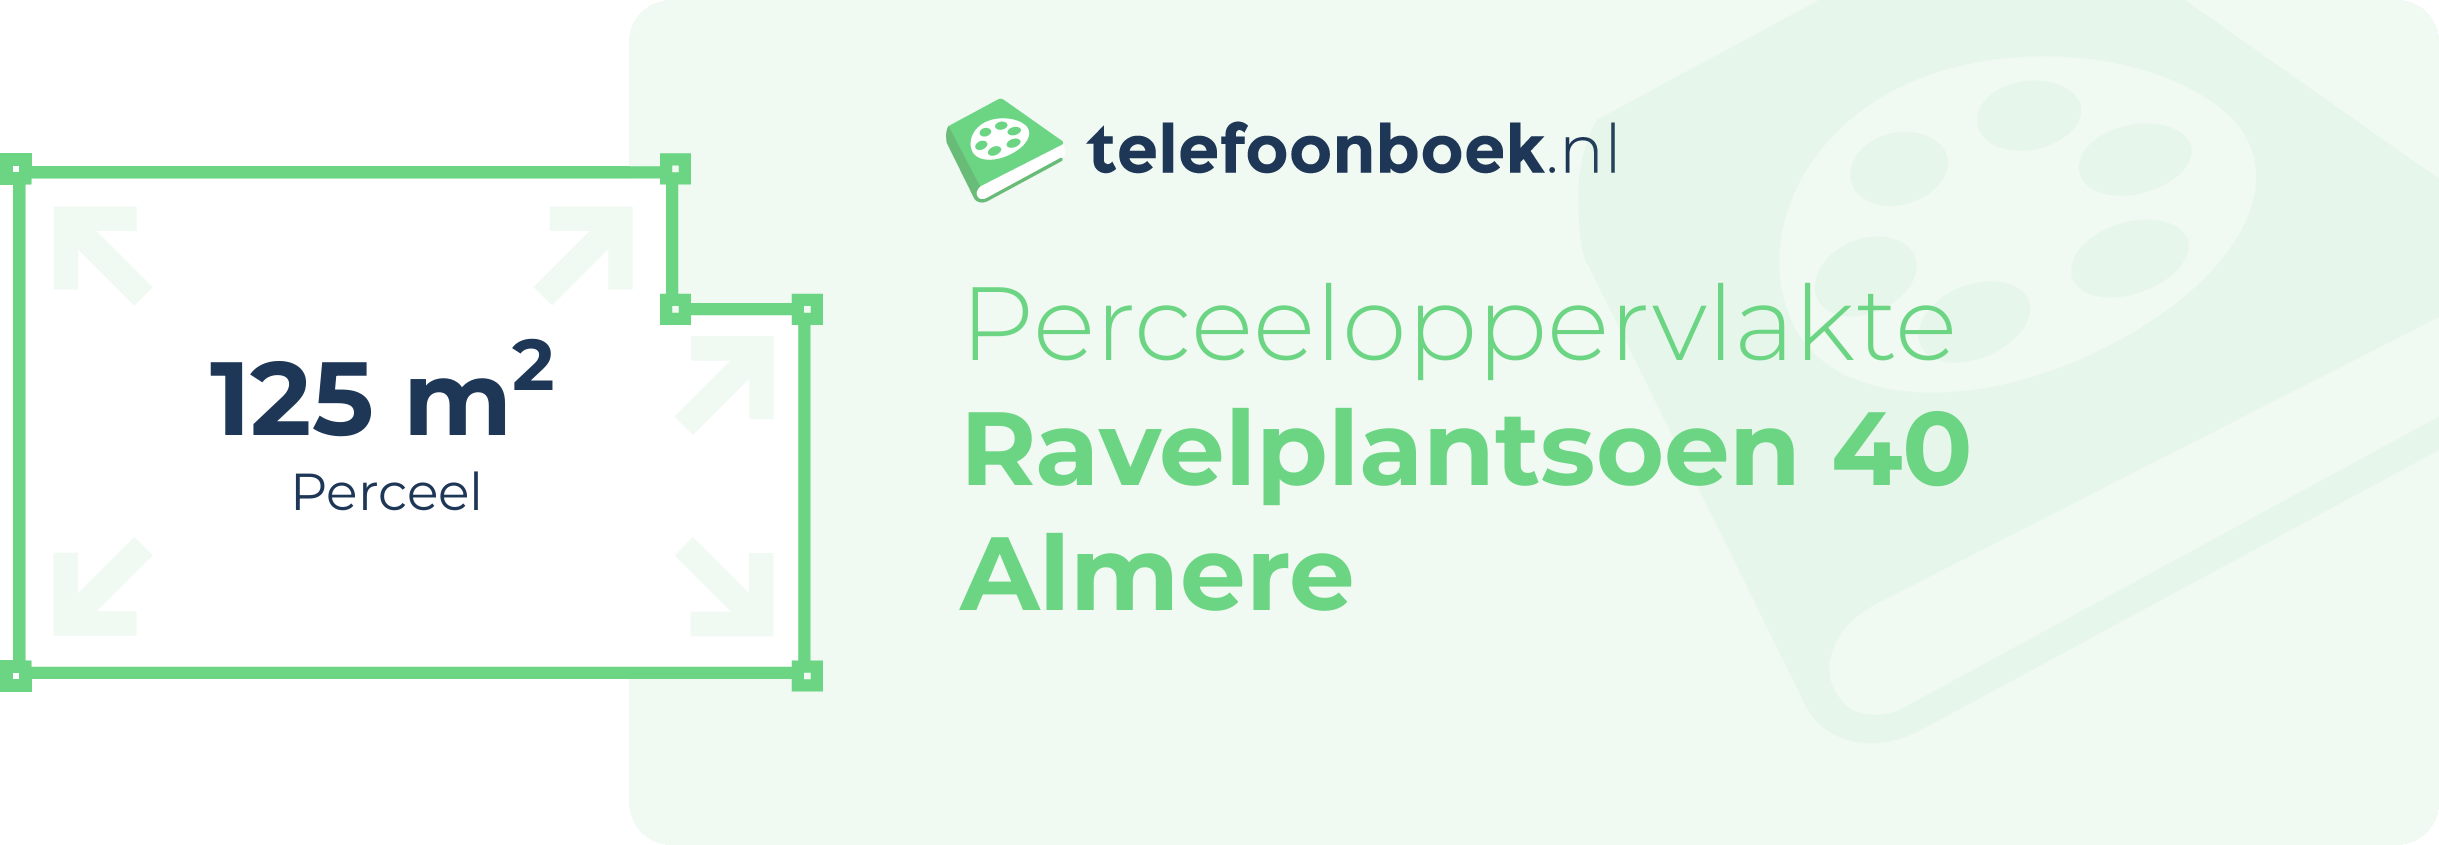 Perceeloppervlakte Ravelplantsoen 40 Almere